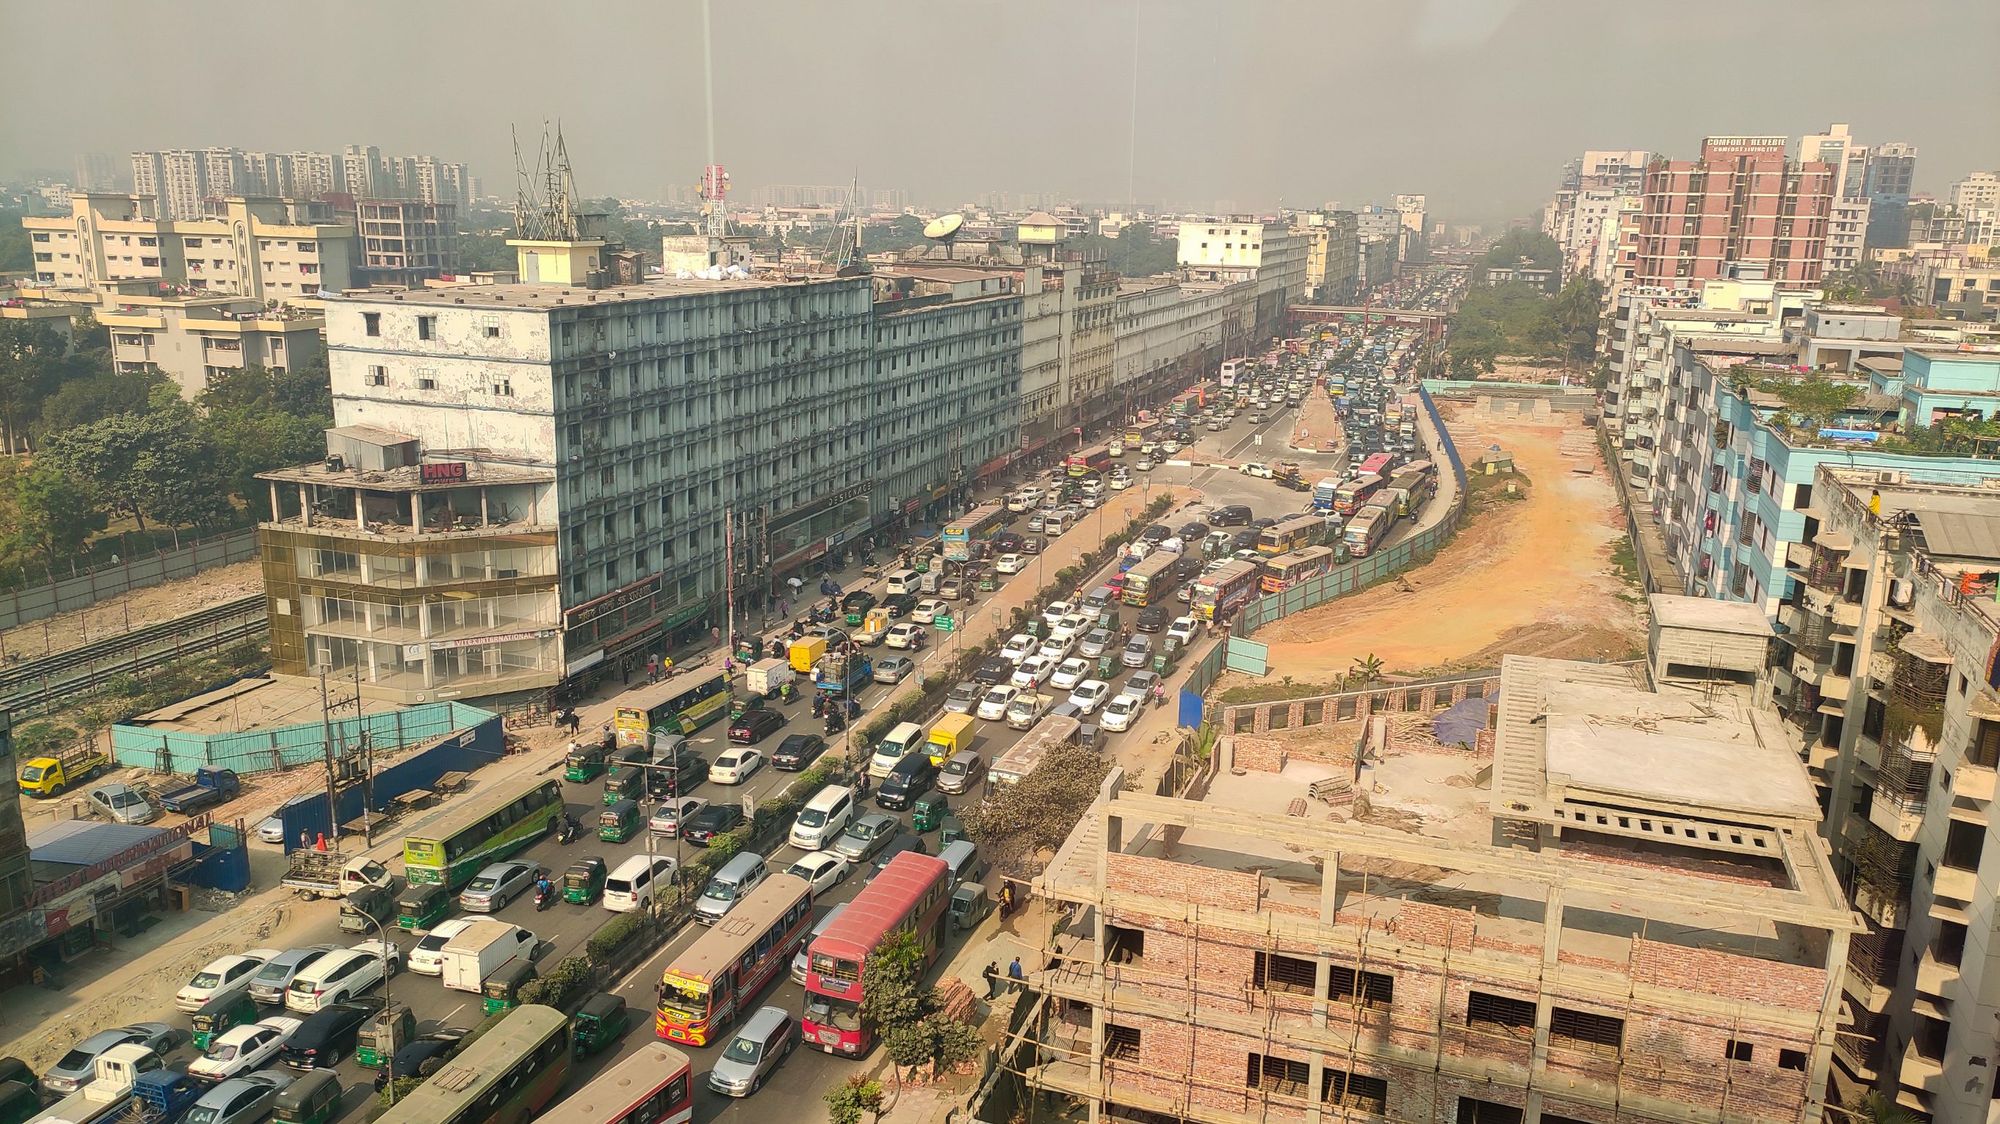 Traffic fills a crowded street in Dhaka, the capital of Bangladesh